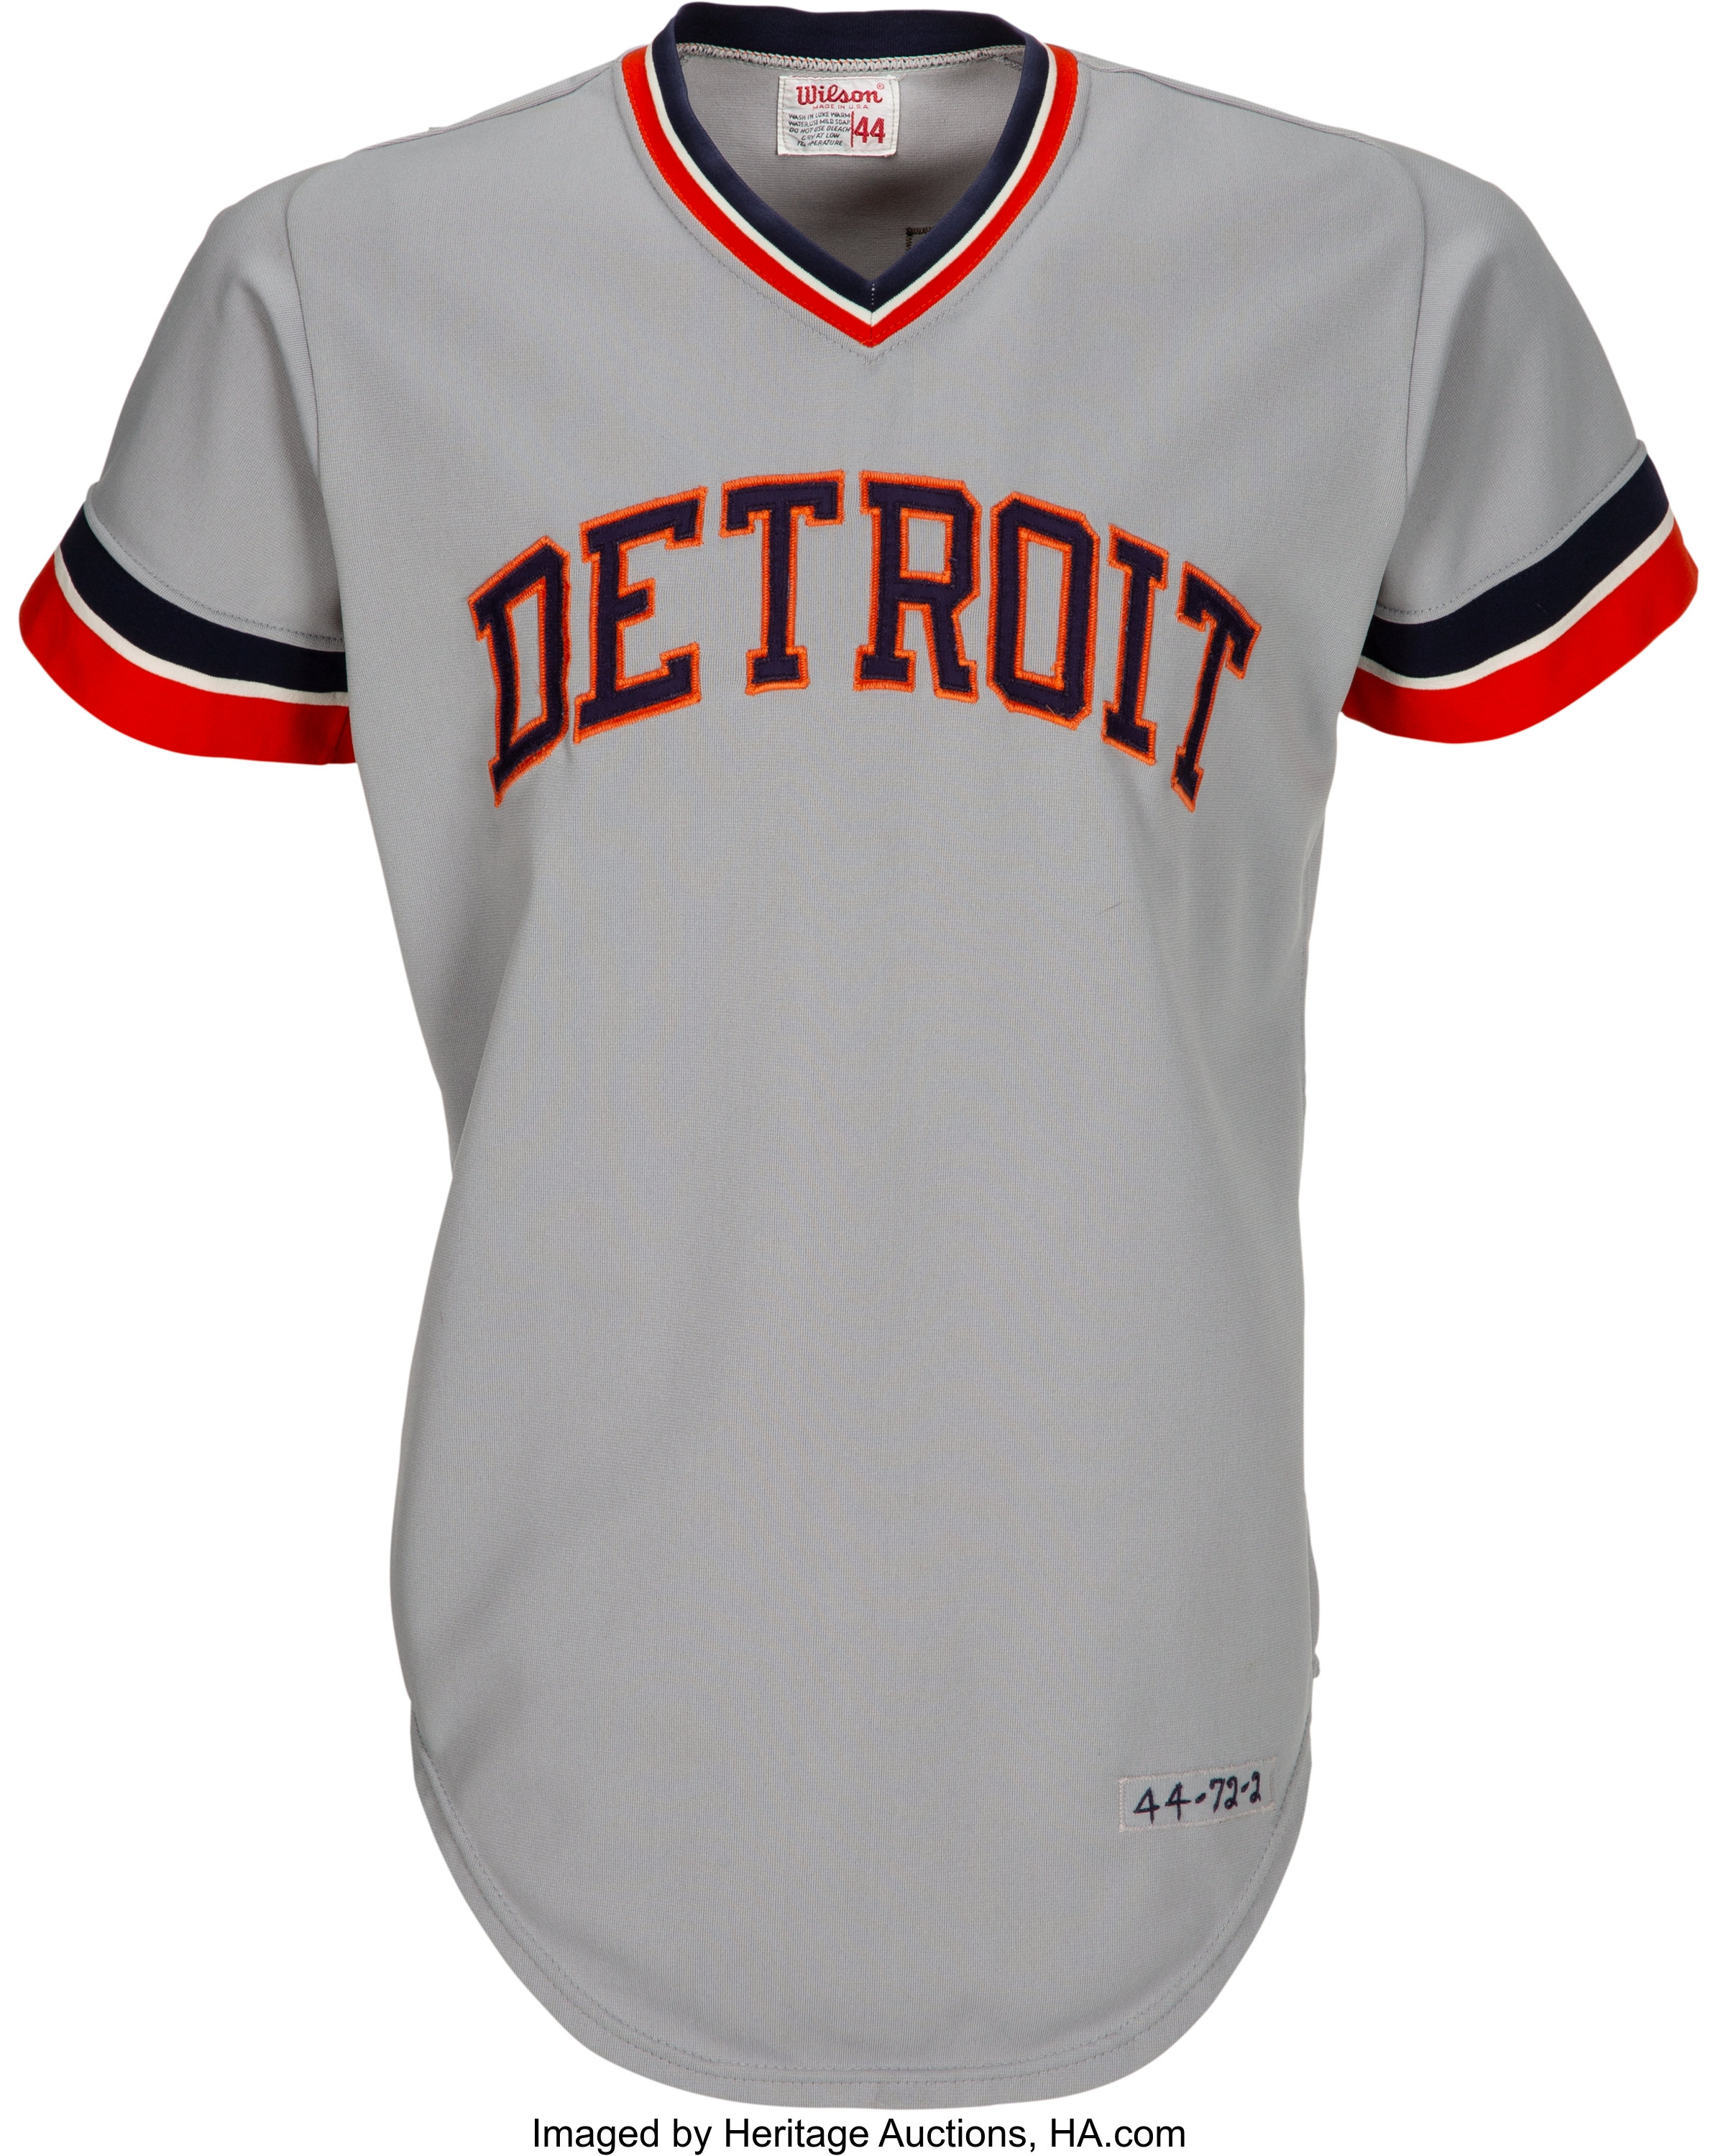 It's time to change the Detroit Tigers' road uniforms - Vintage